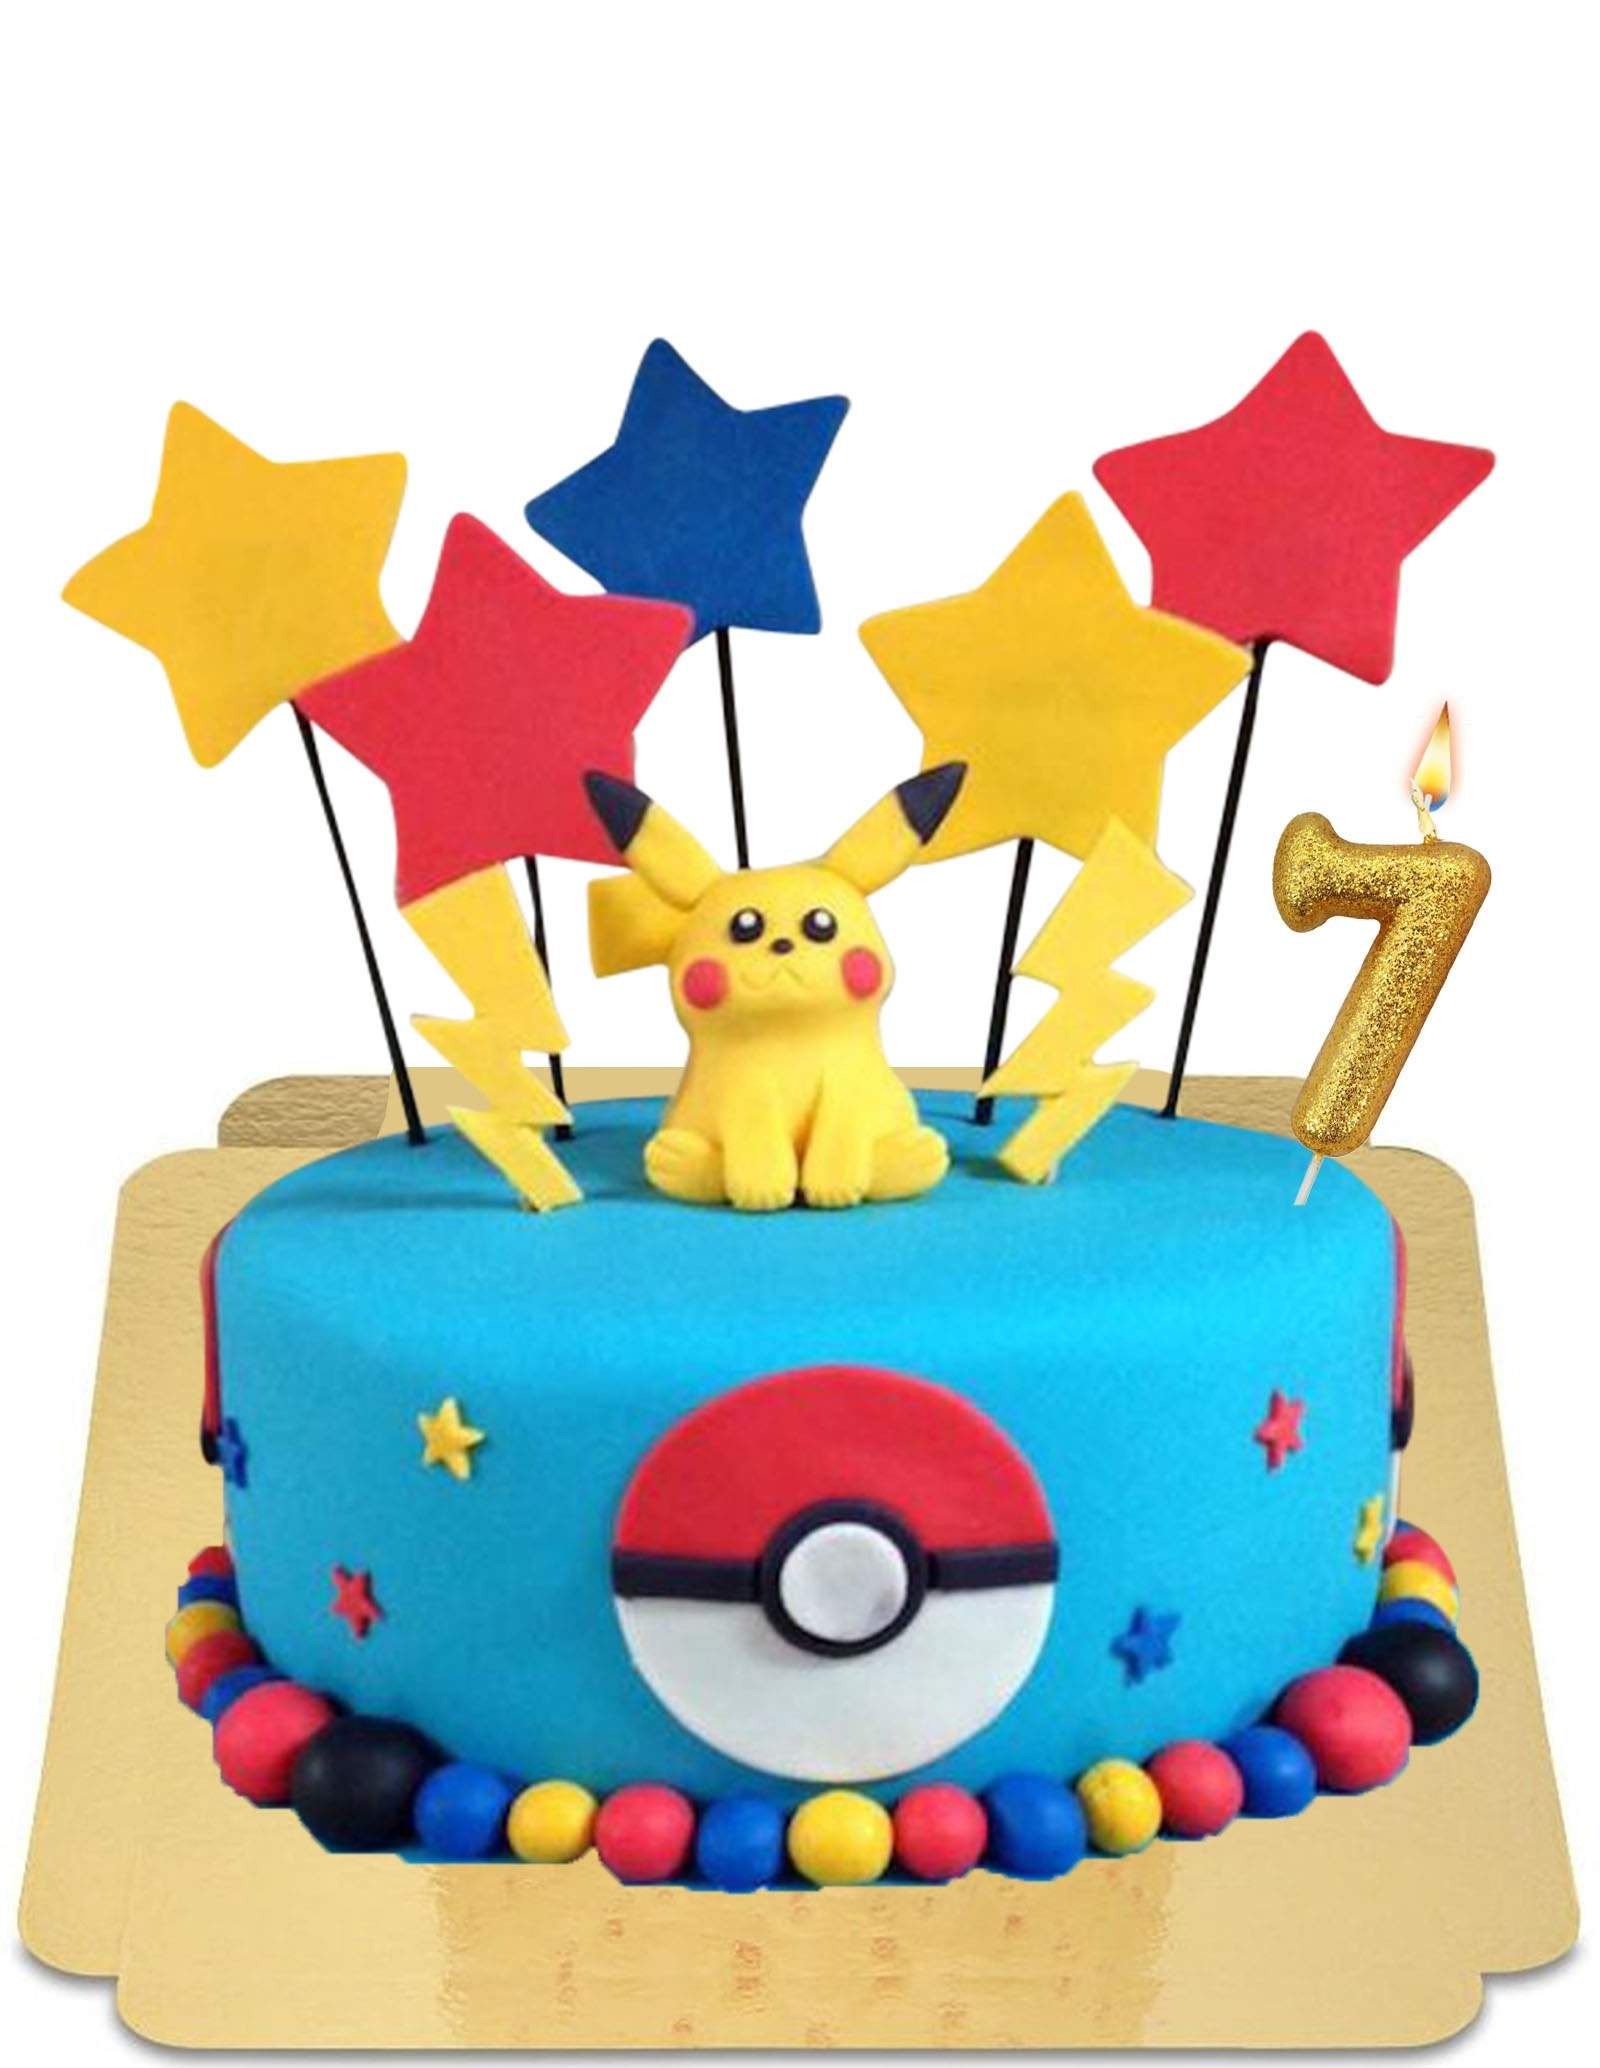 Buy Fondant Pikachu Power Cake-Pretty Pikachu Cake